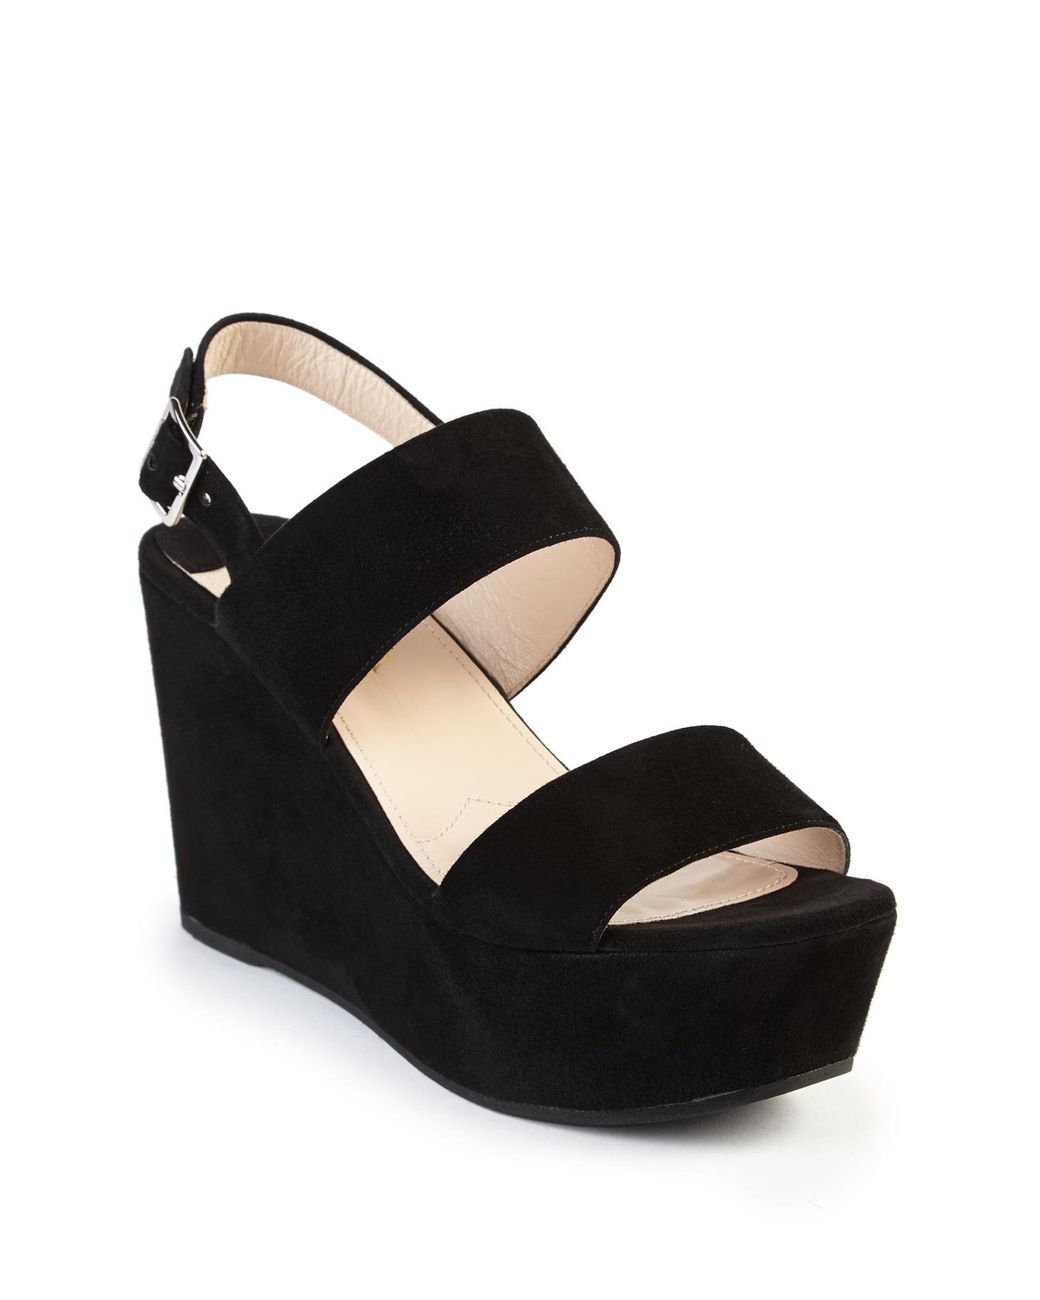 Prada Suede Platform Wedge Sandals in Black | Lyst